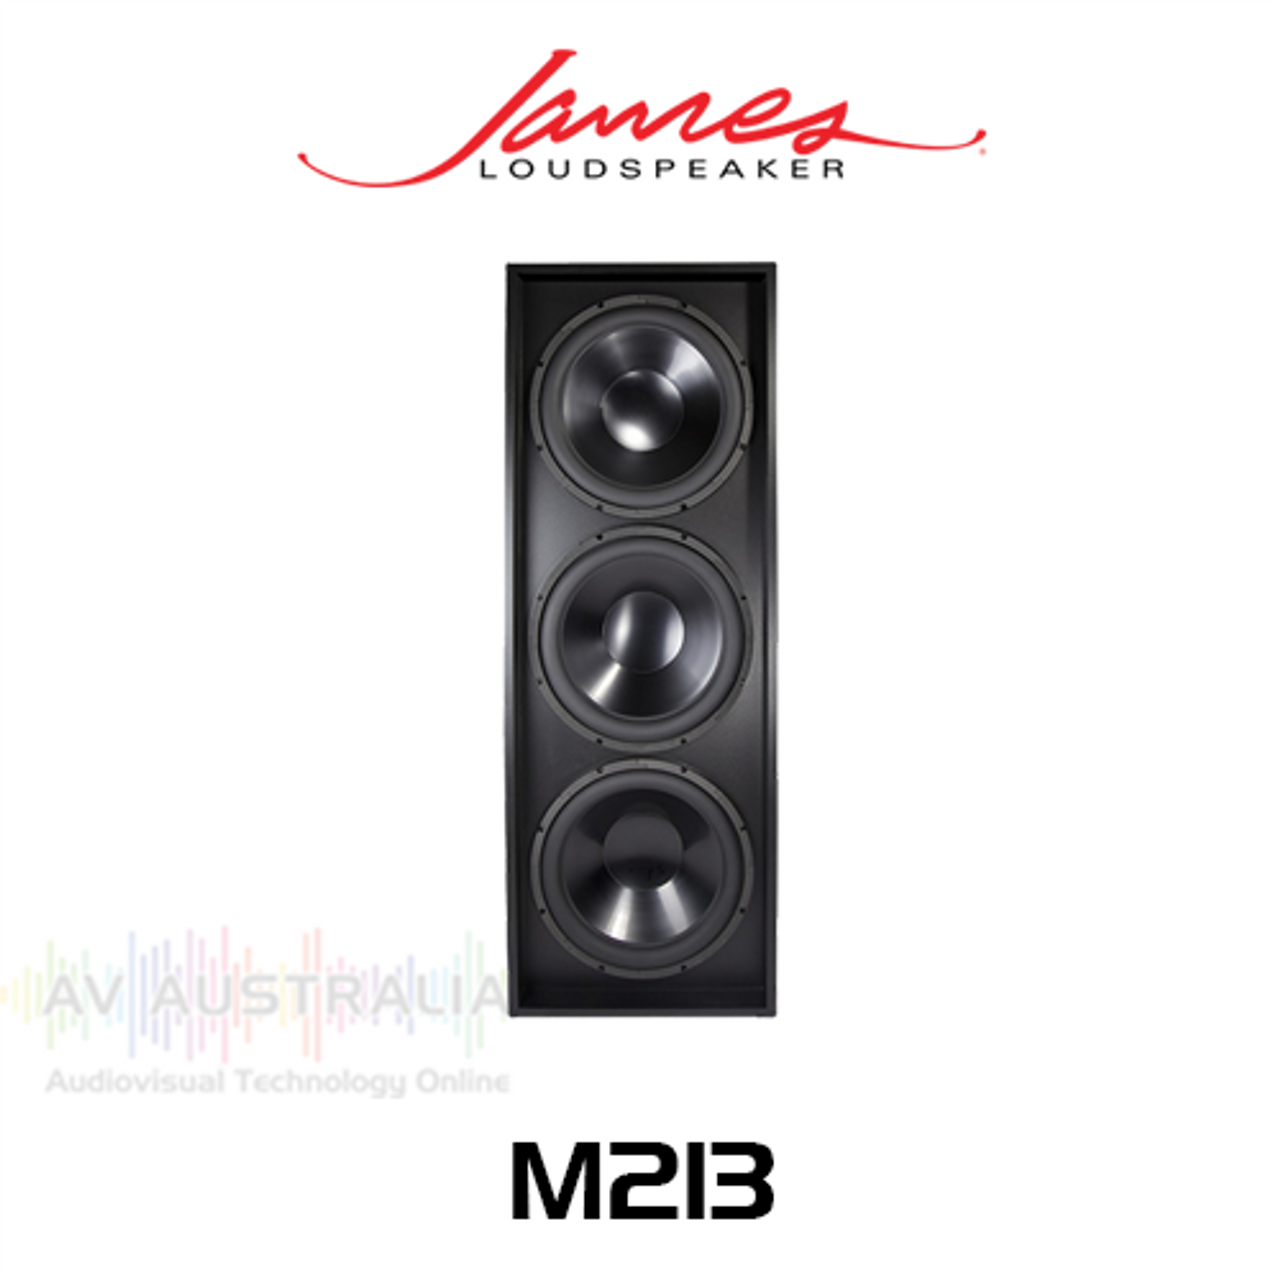 James Loudspeaker M213 21" Floorstanding Subwoofer with Passive Radiators (Each)